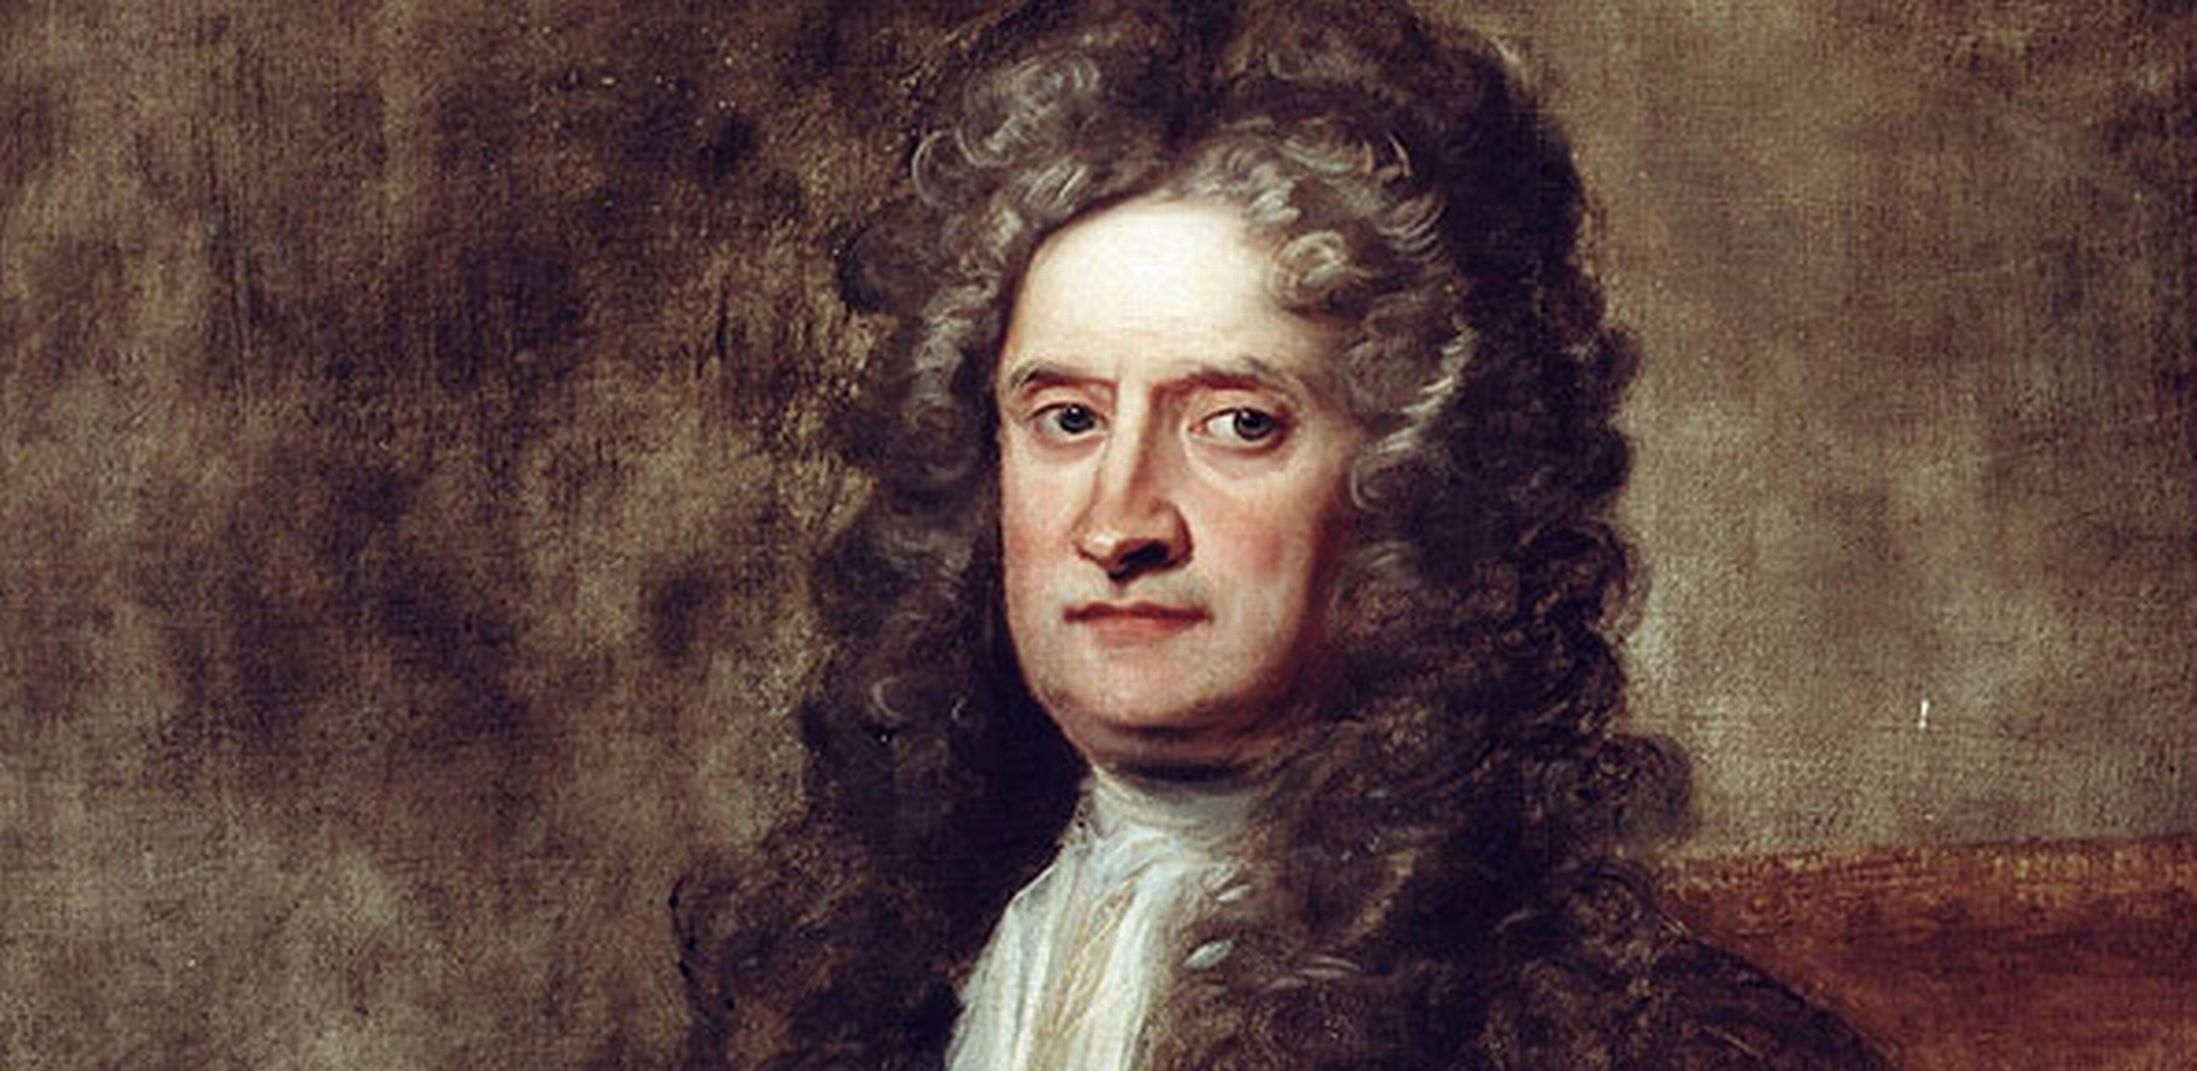 Sir Isaac Newton Hd Wallpaper E1451918187510 مجلة نقطة العلمية